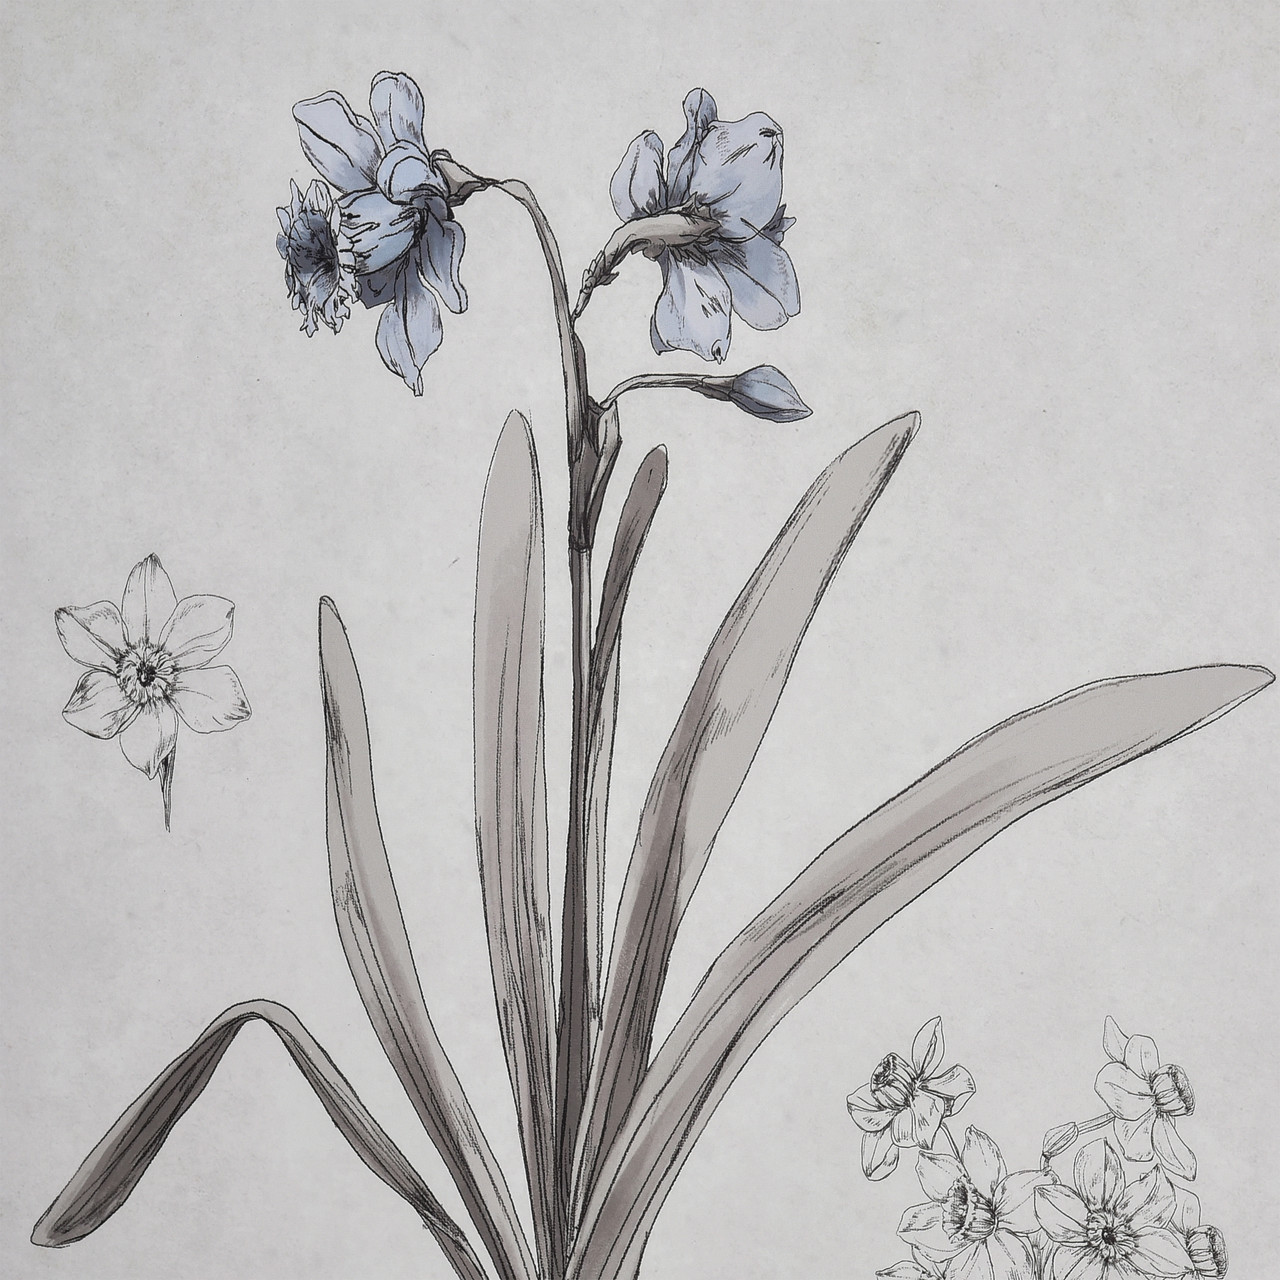 ELK HOME S0056-10634 Daffodil Botanic Framed Wall Art